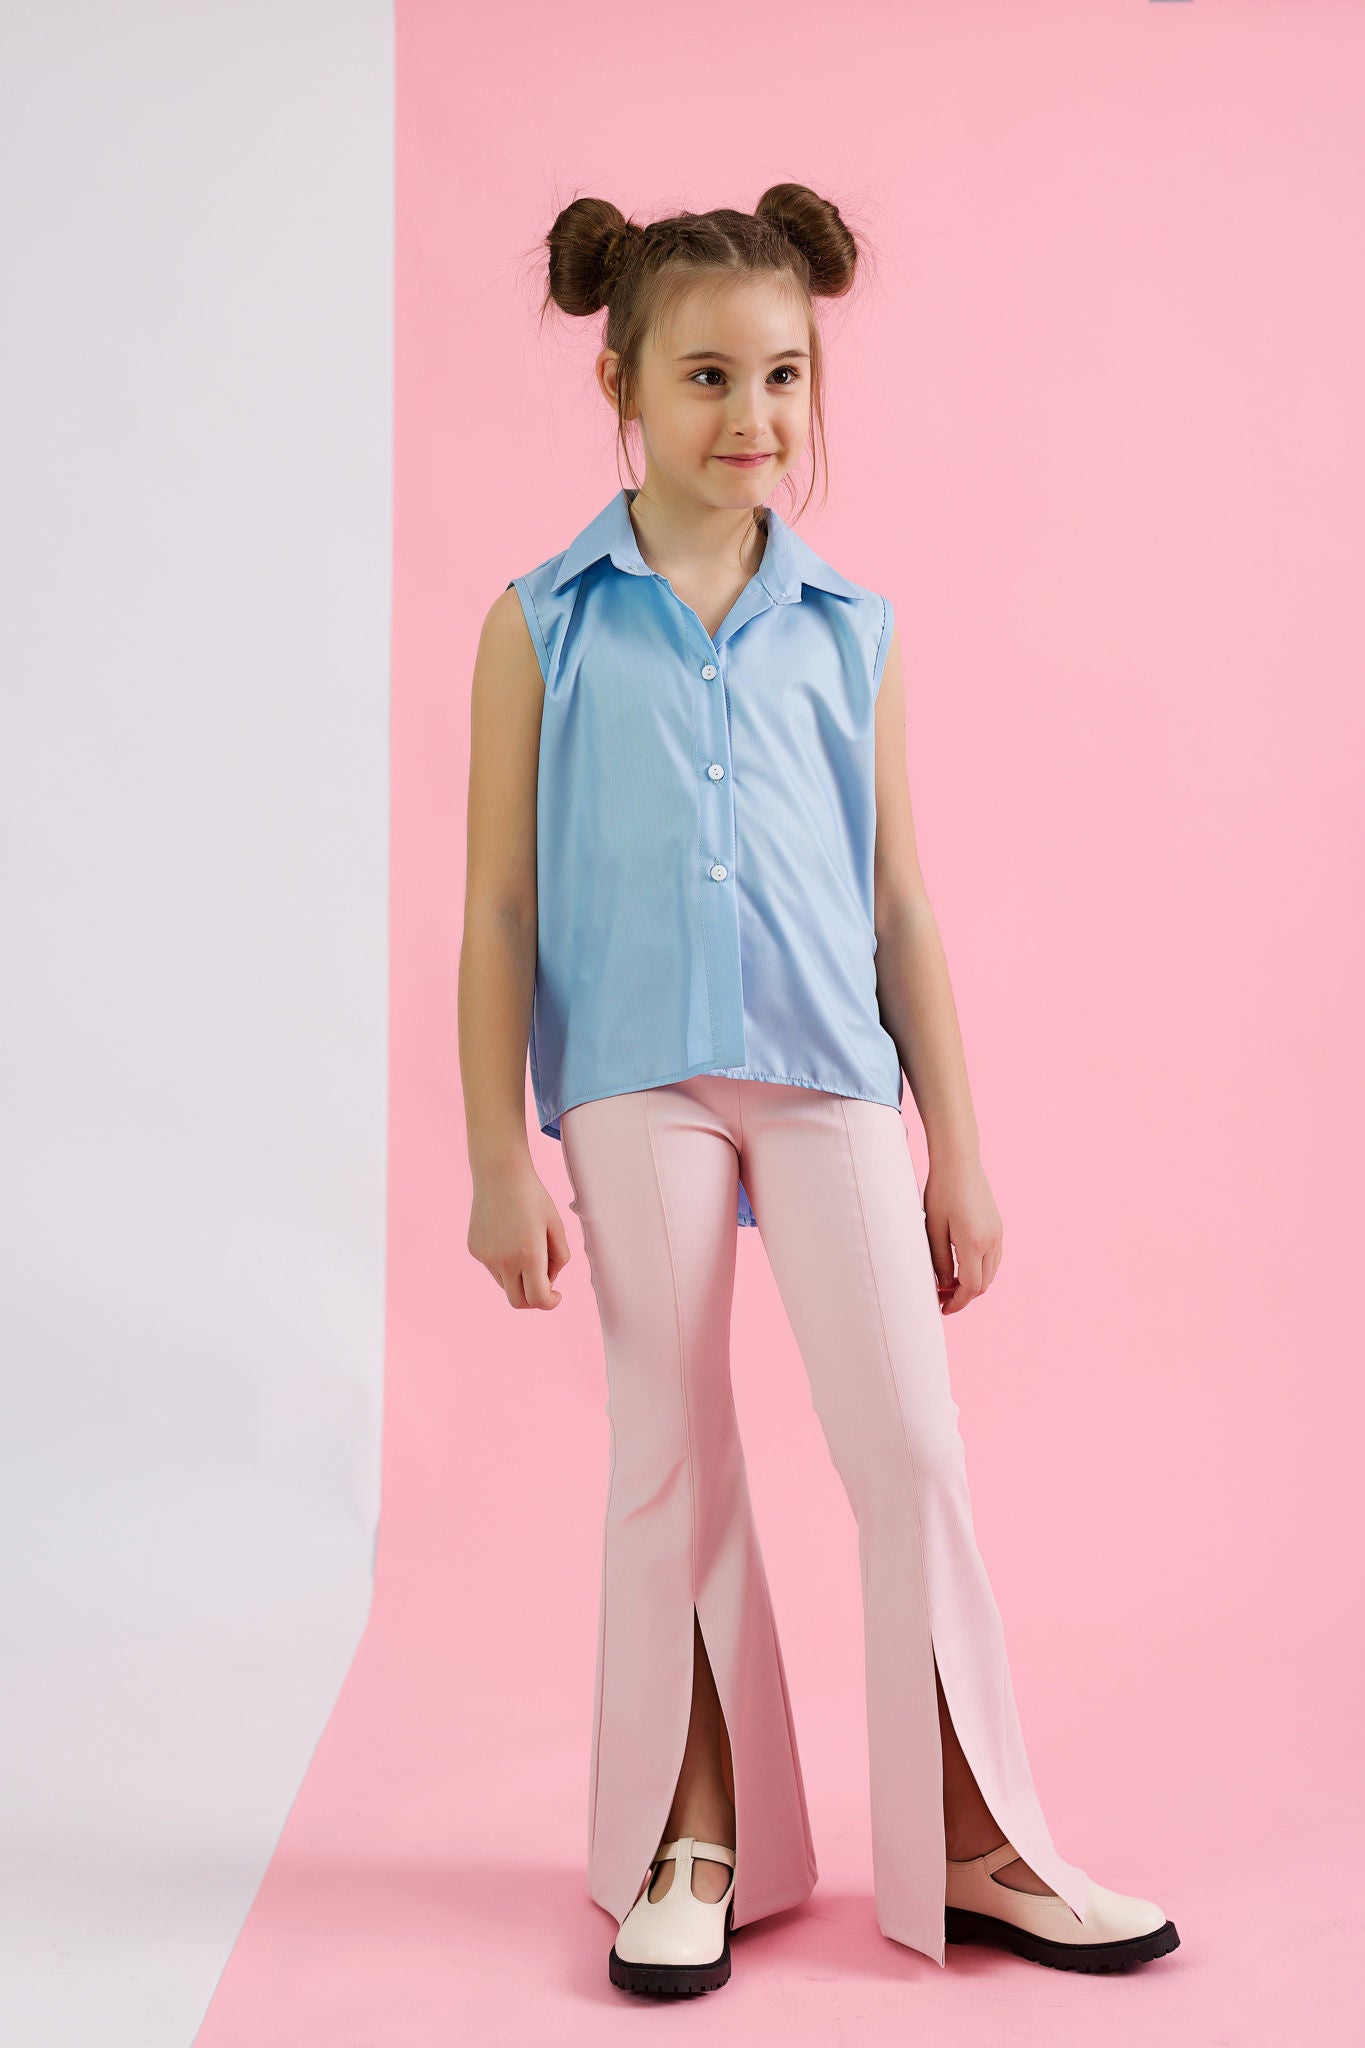 Compleu pentru fete, camasa bleu cu fundite si pantaloni evazati roz din piele ecologica - Alis